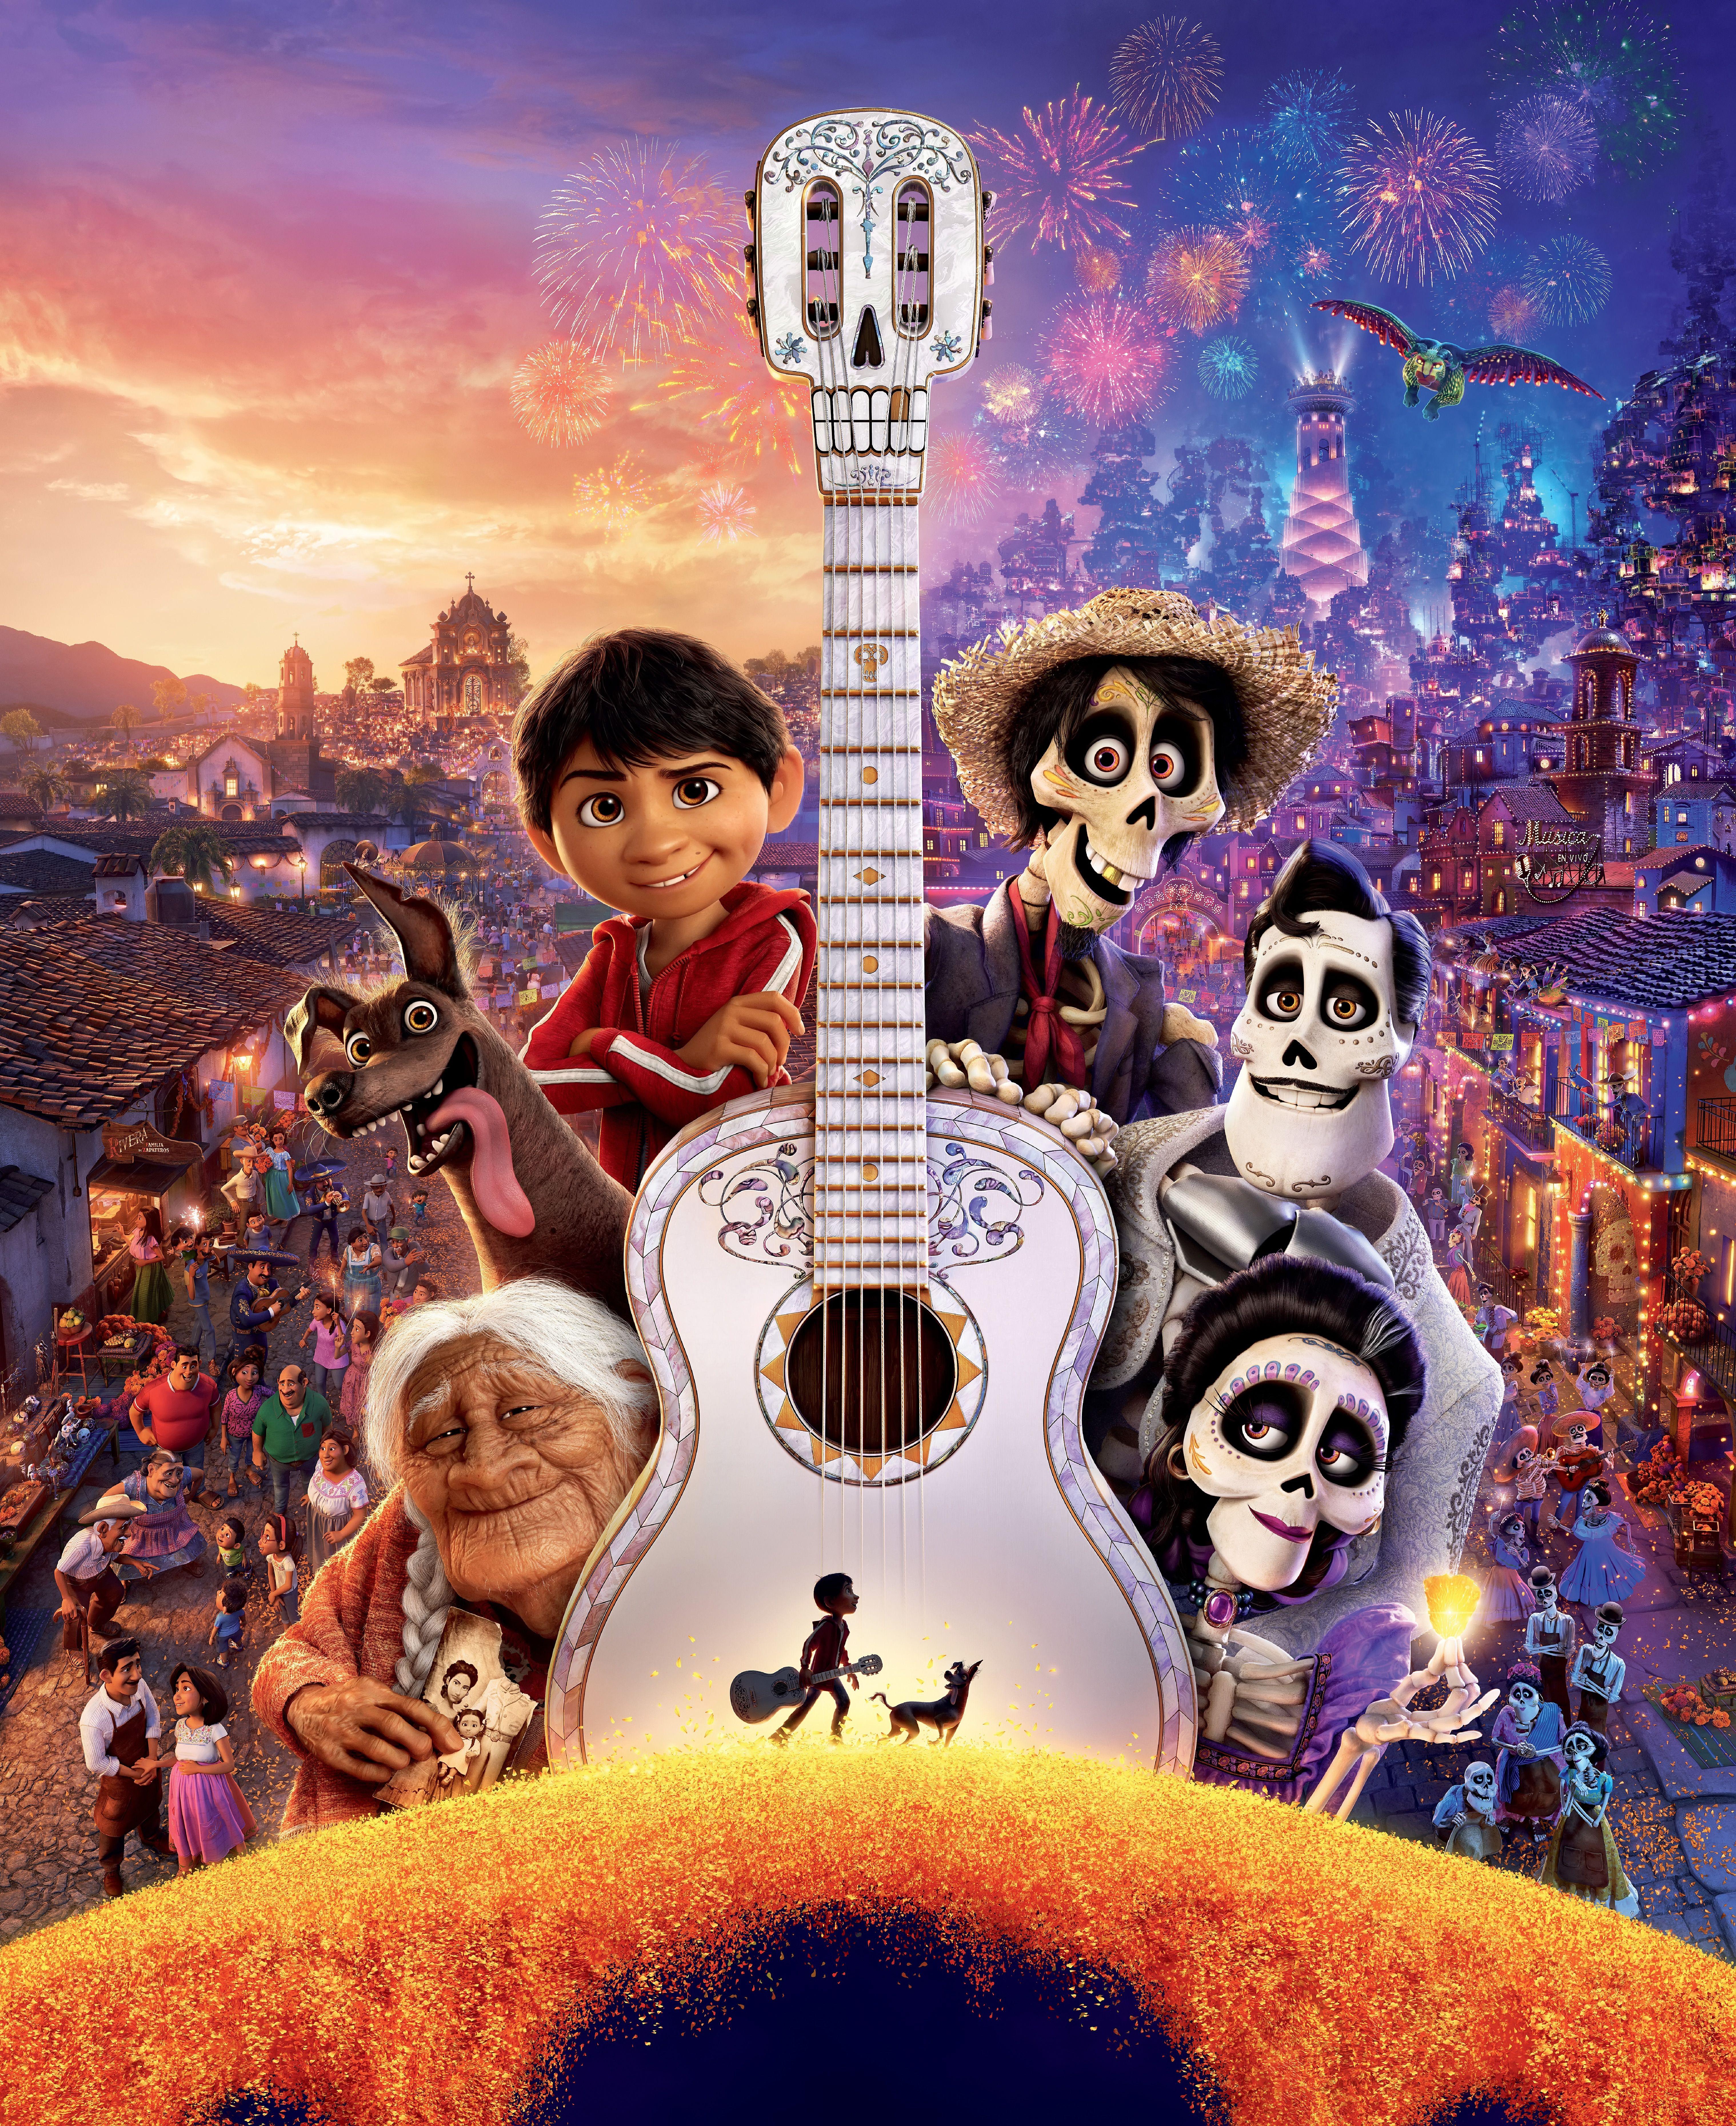 Wallpaper Coco, Pixar, Animation, 4K, 8K, Movies